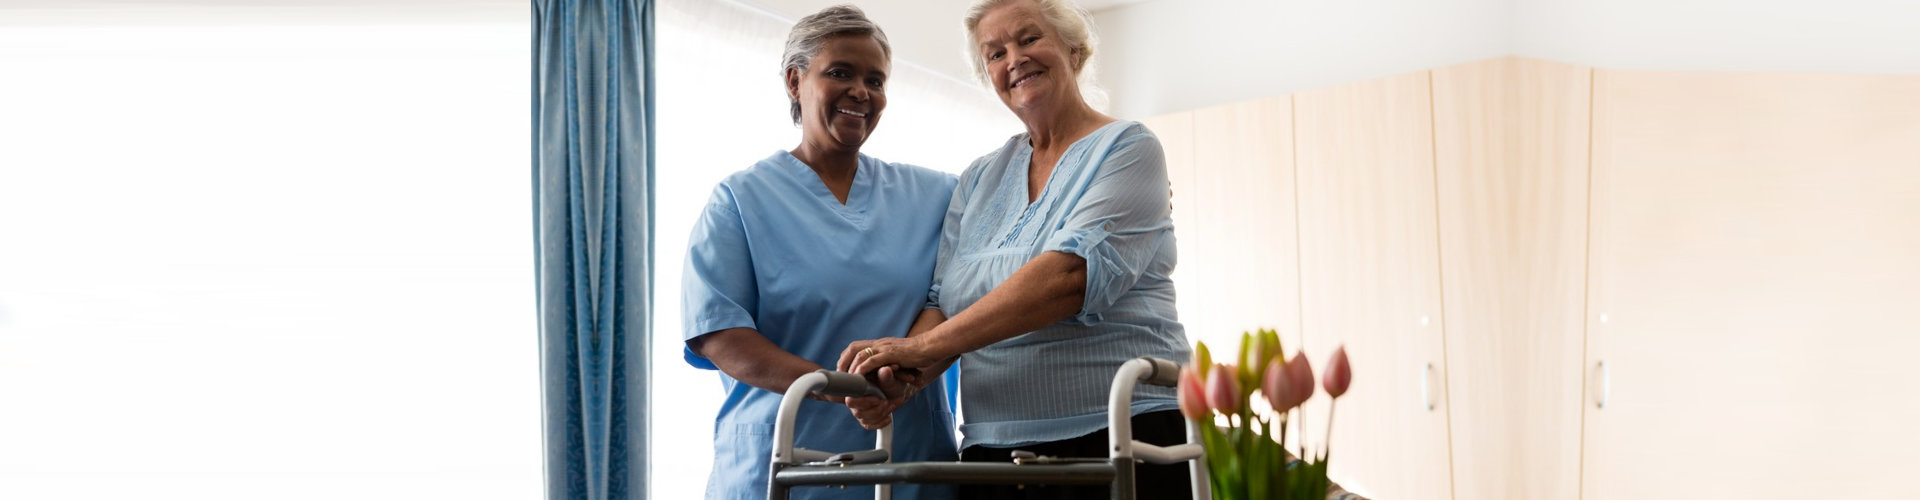 caregiver and senior woman holding her walking frame smiling